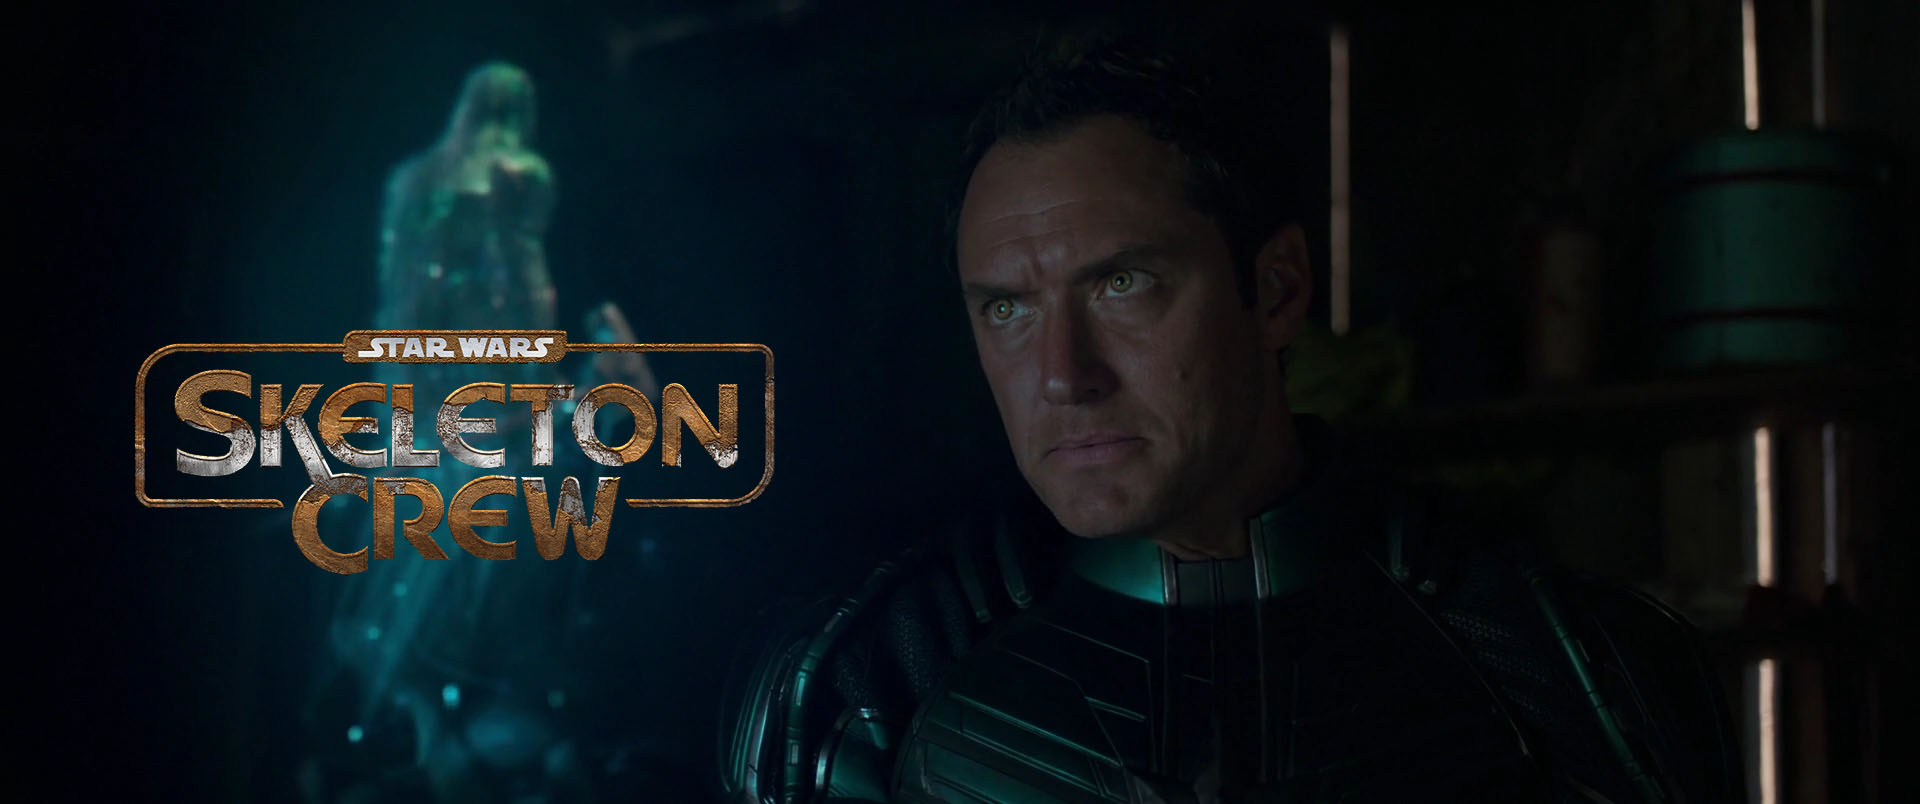 Jon Watt's 'Star Wars Skeleton Crew' Casts Jude Law Knight Edge Media